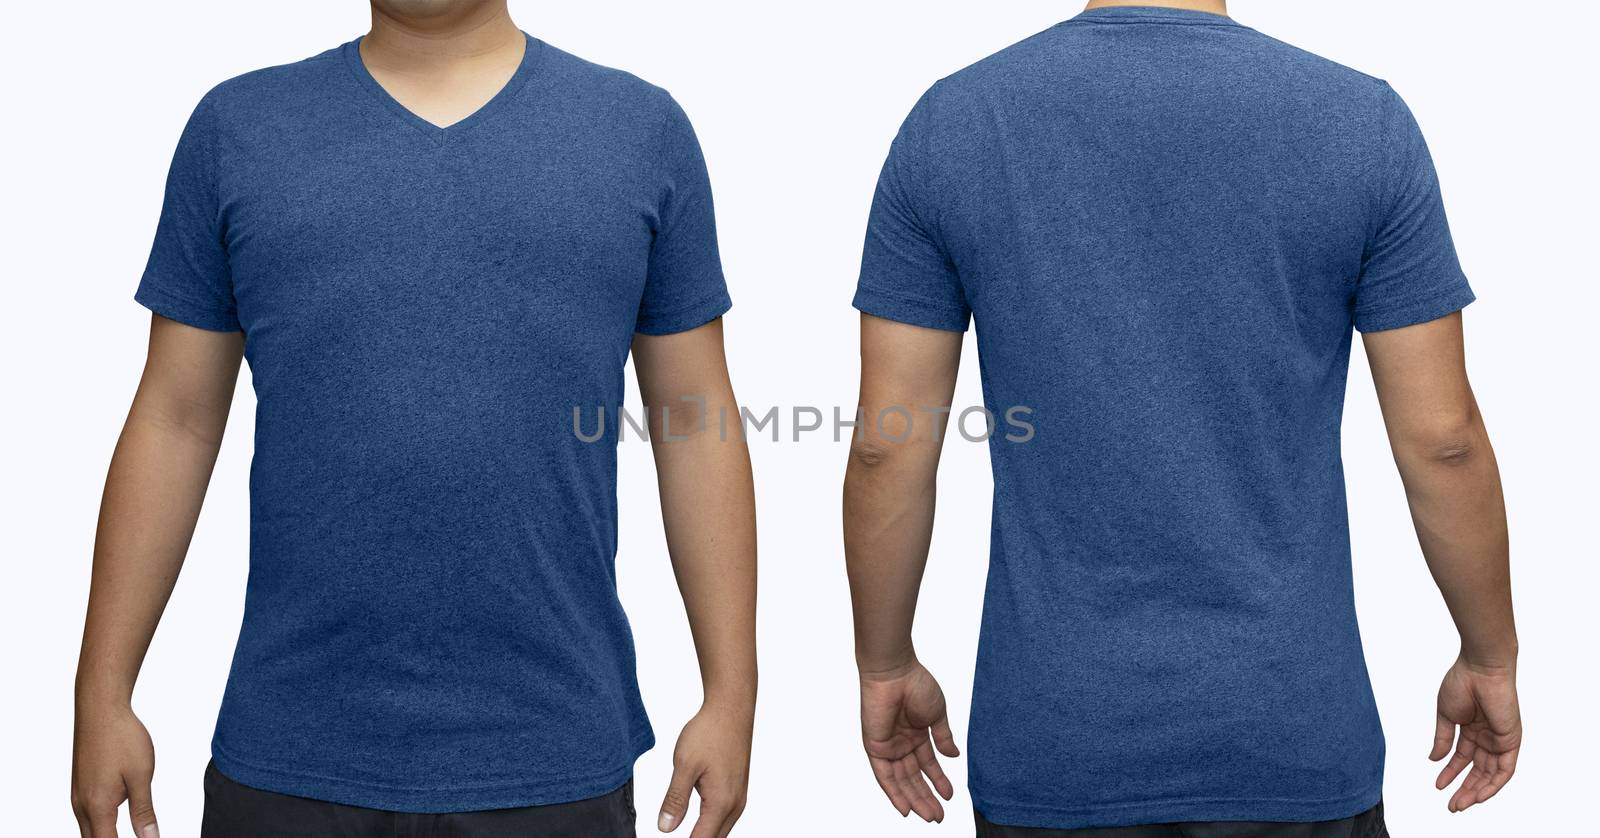 Blue blank v-neck t-shirt on human body for graphic design mock up